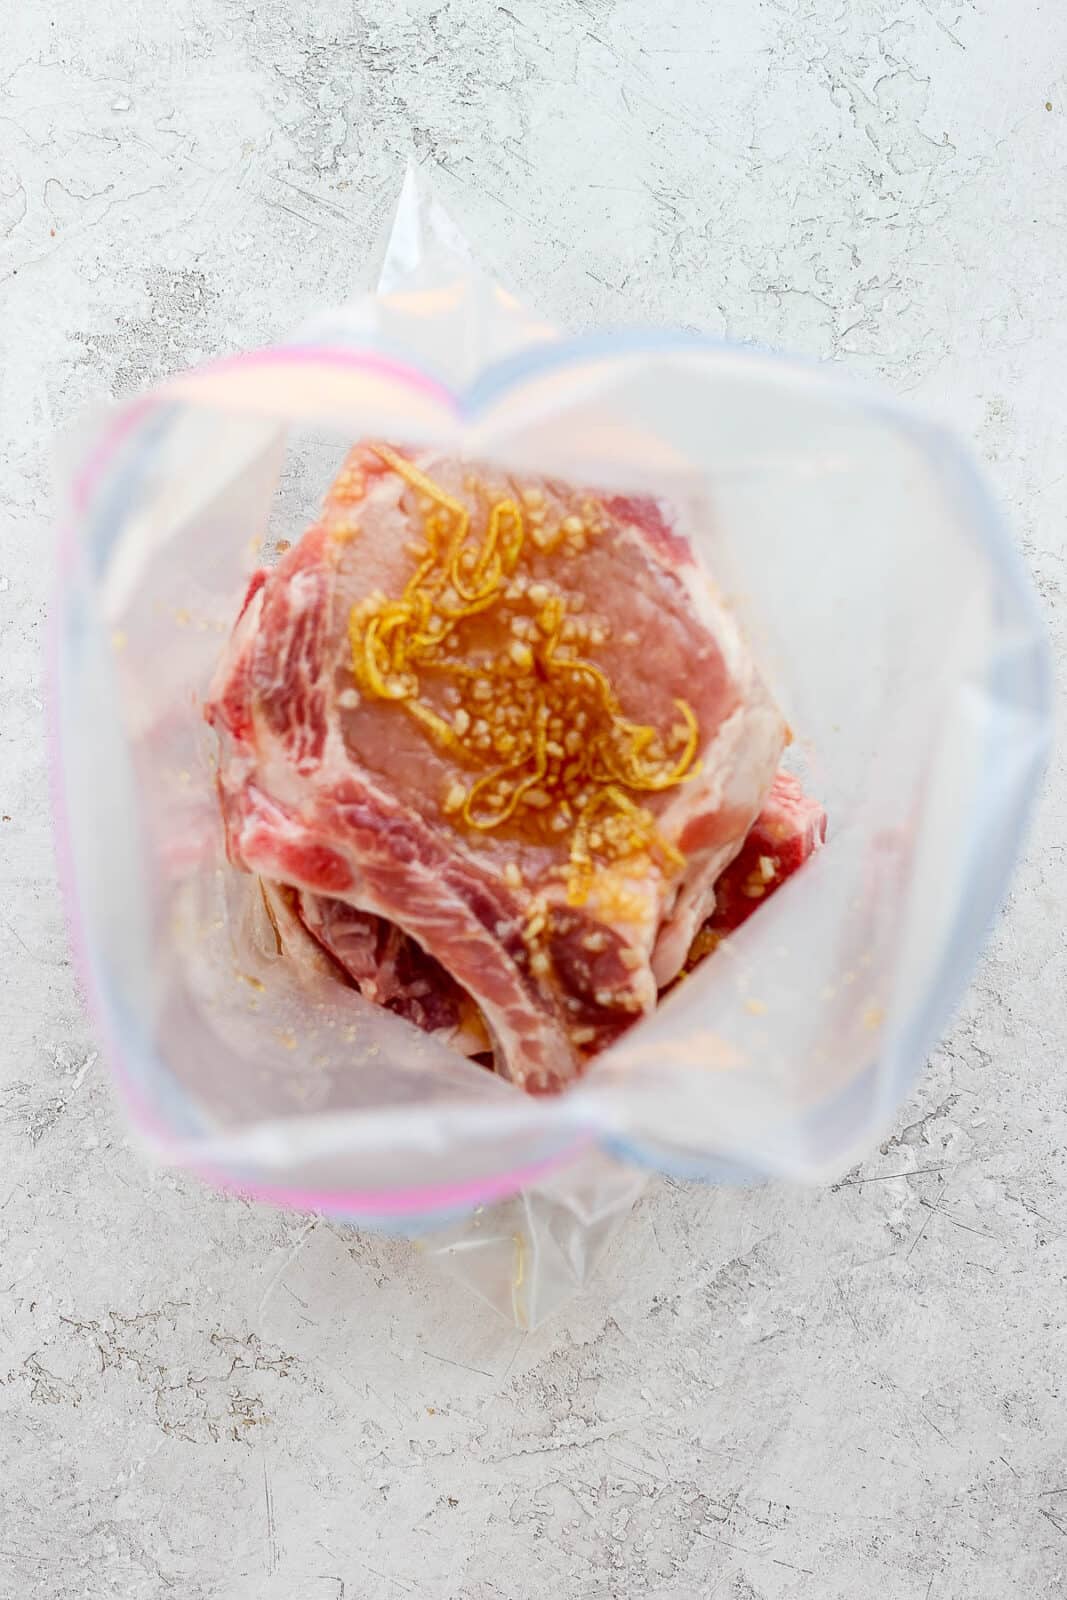 Honey garlic marinade ingredients with pork chops in a plastic bag.